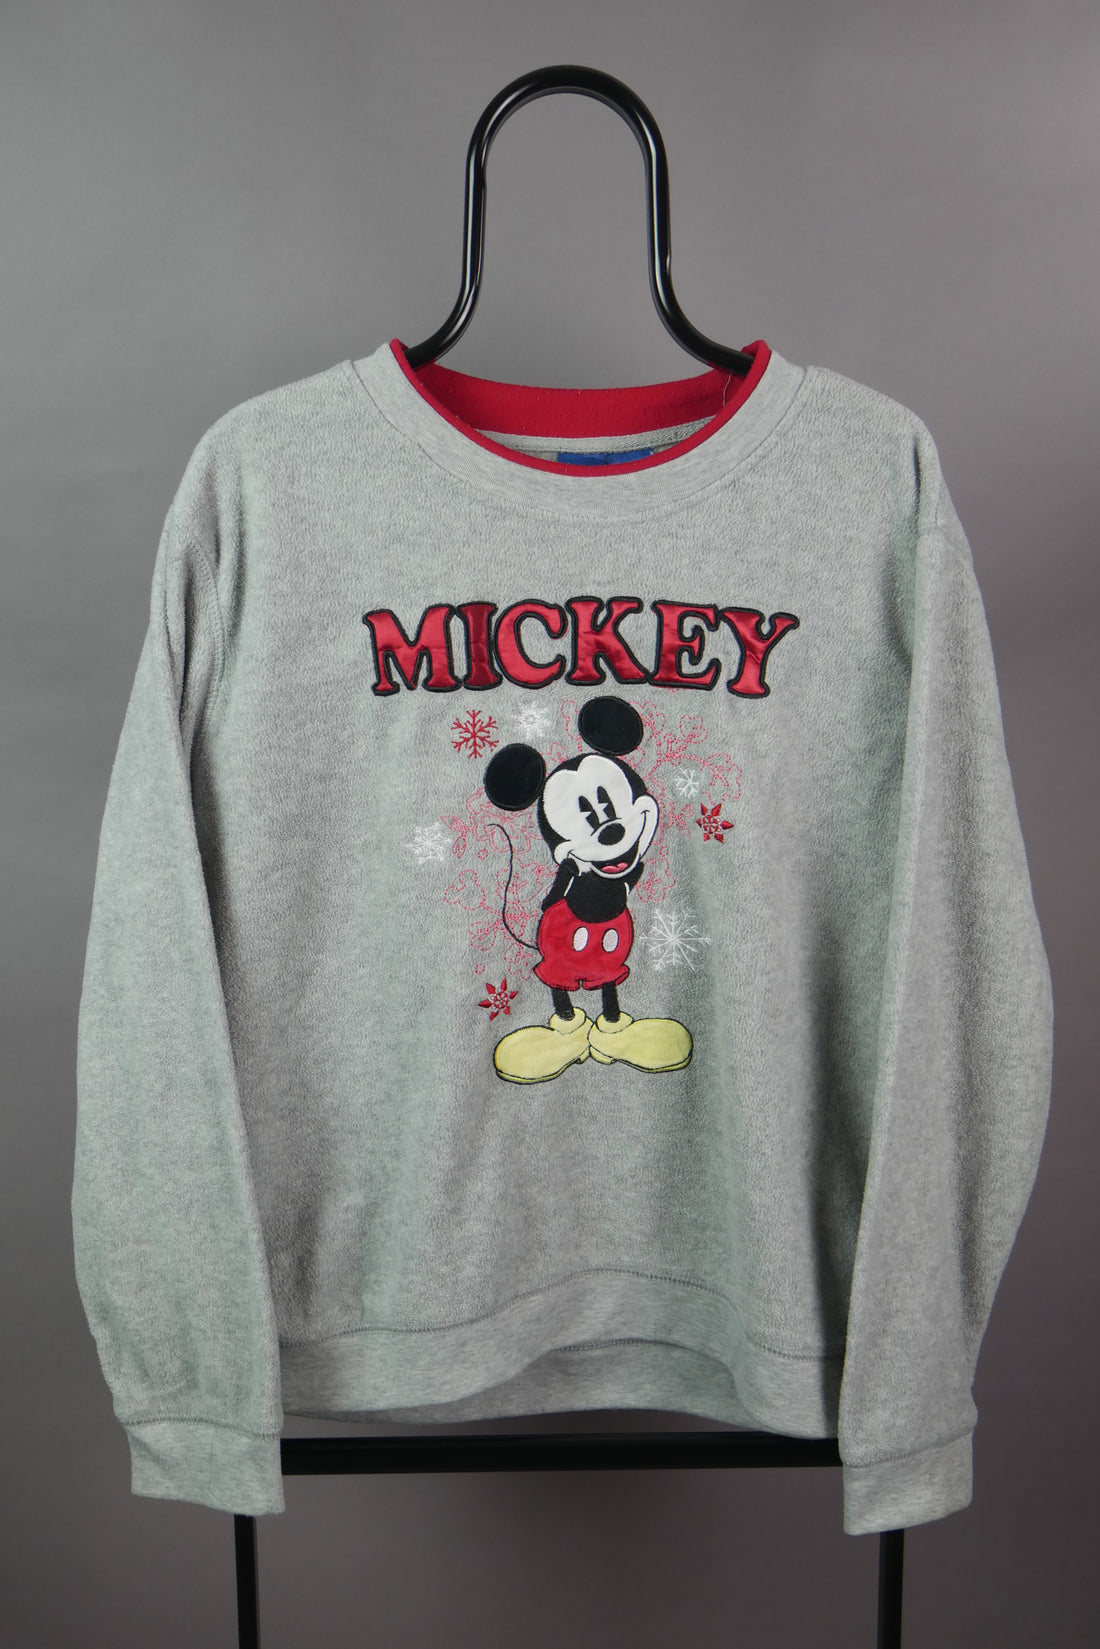 The Mickey Mouse Embroidered Fleece Sweatshirt (XL)